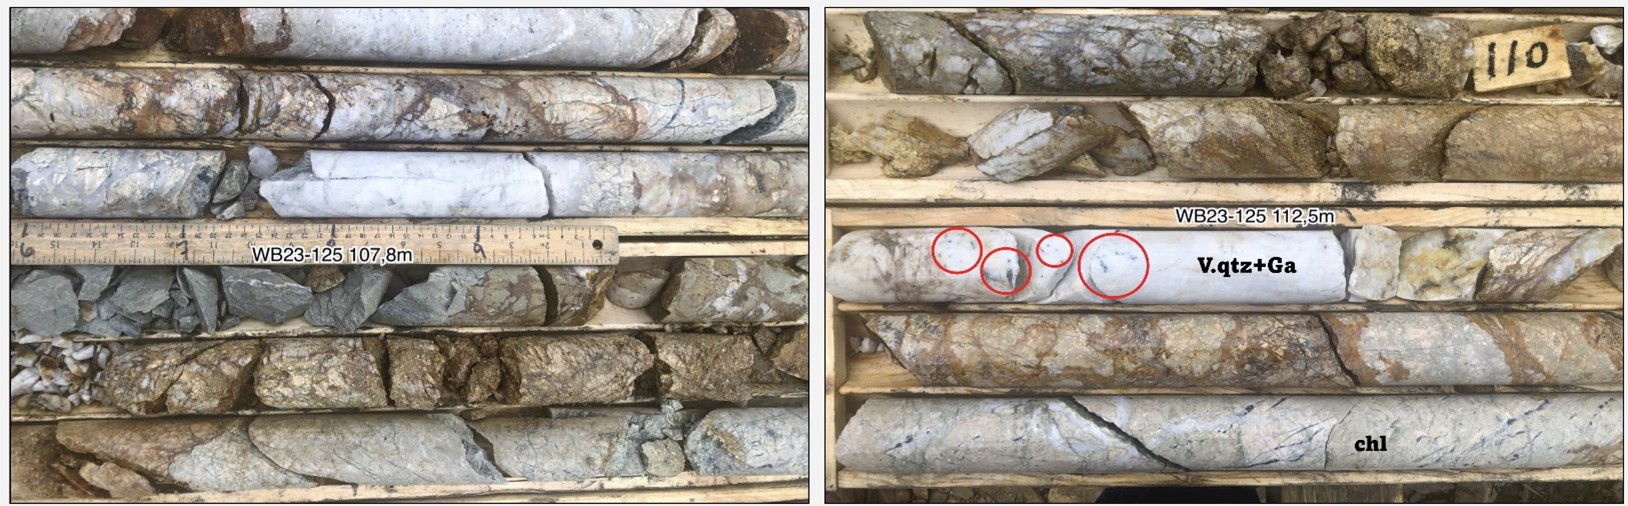 Quartz veins – stockwork with limonite and sulphides @ > 100 m downhole depth (WB23-125)